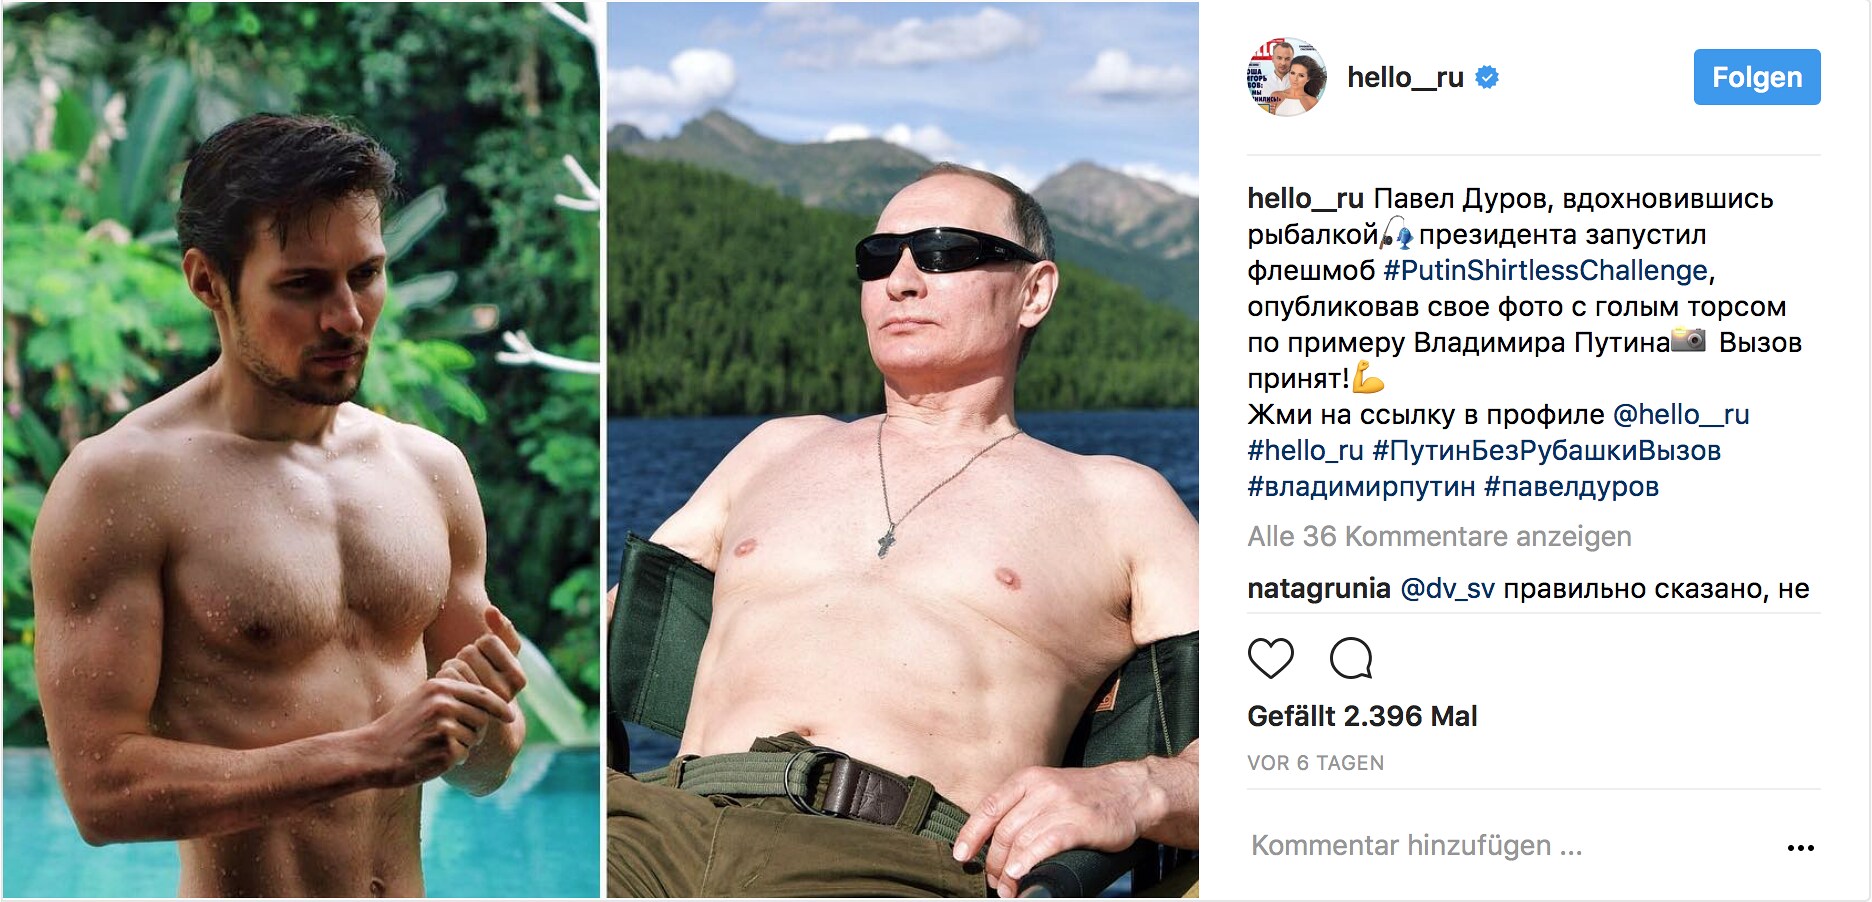 Putins Shirtless Challenge Mdrde